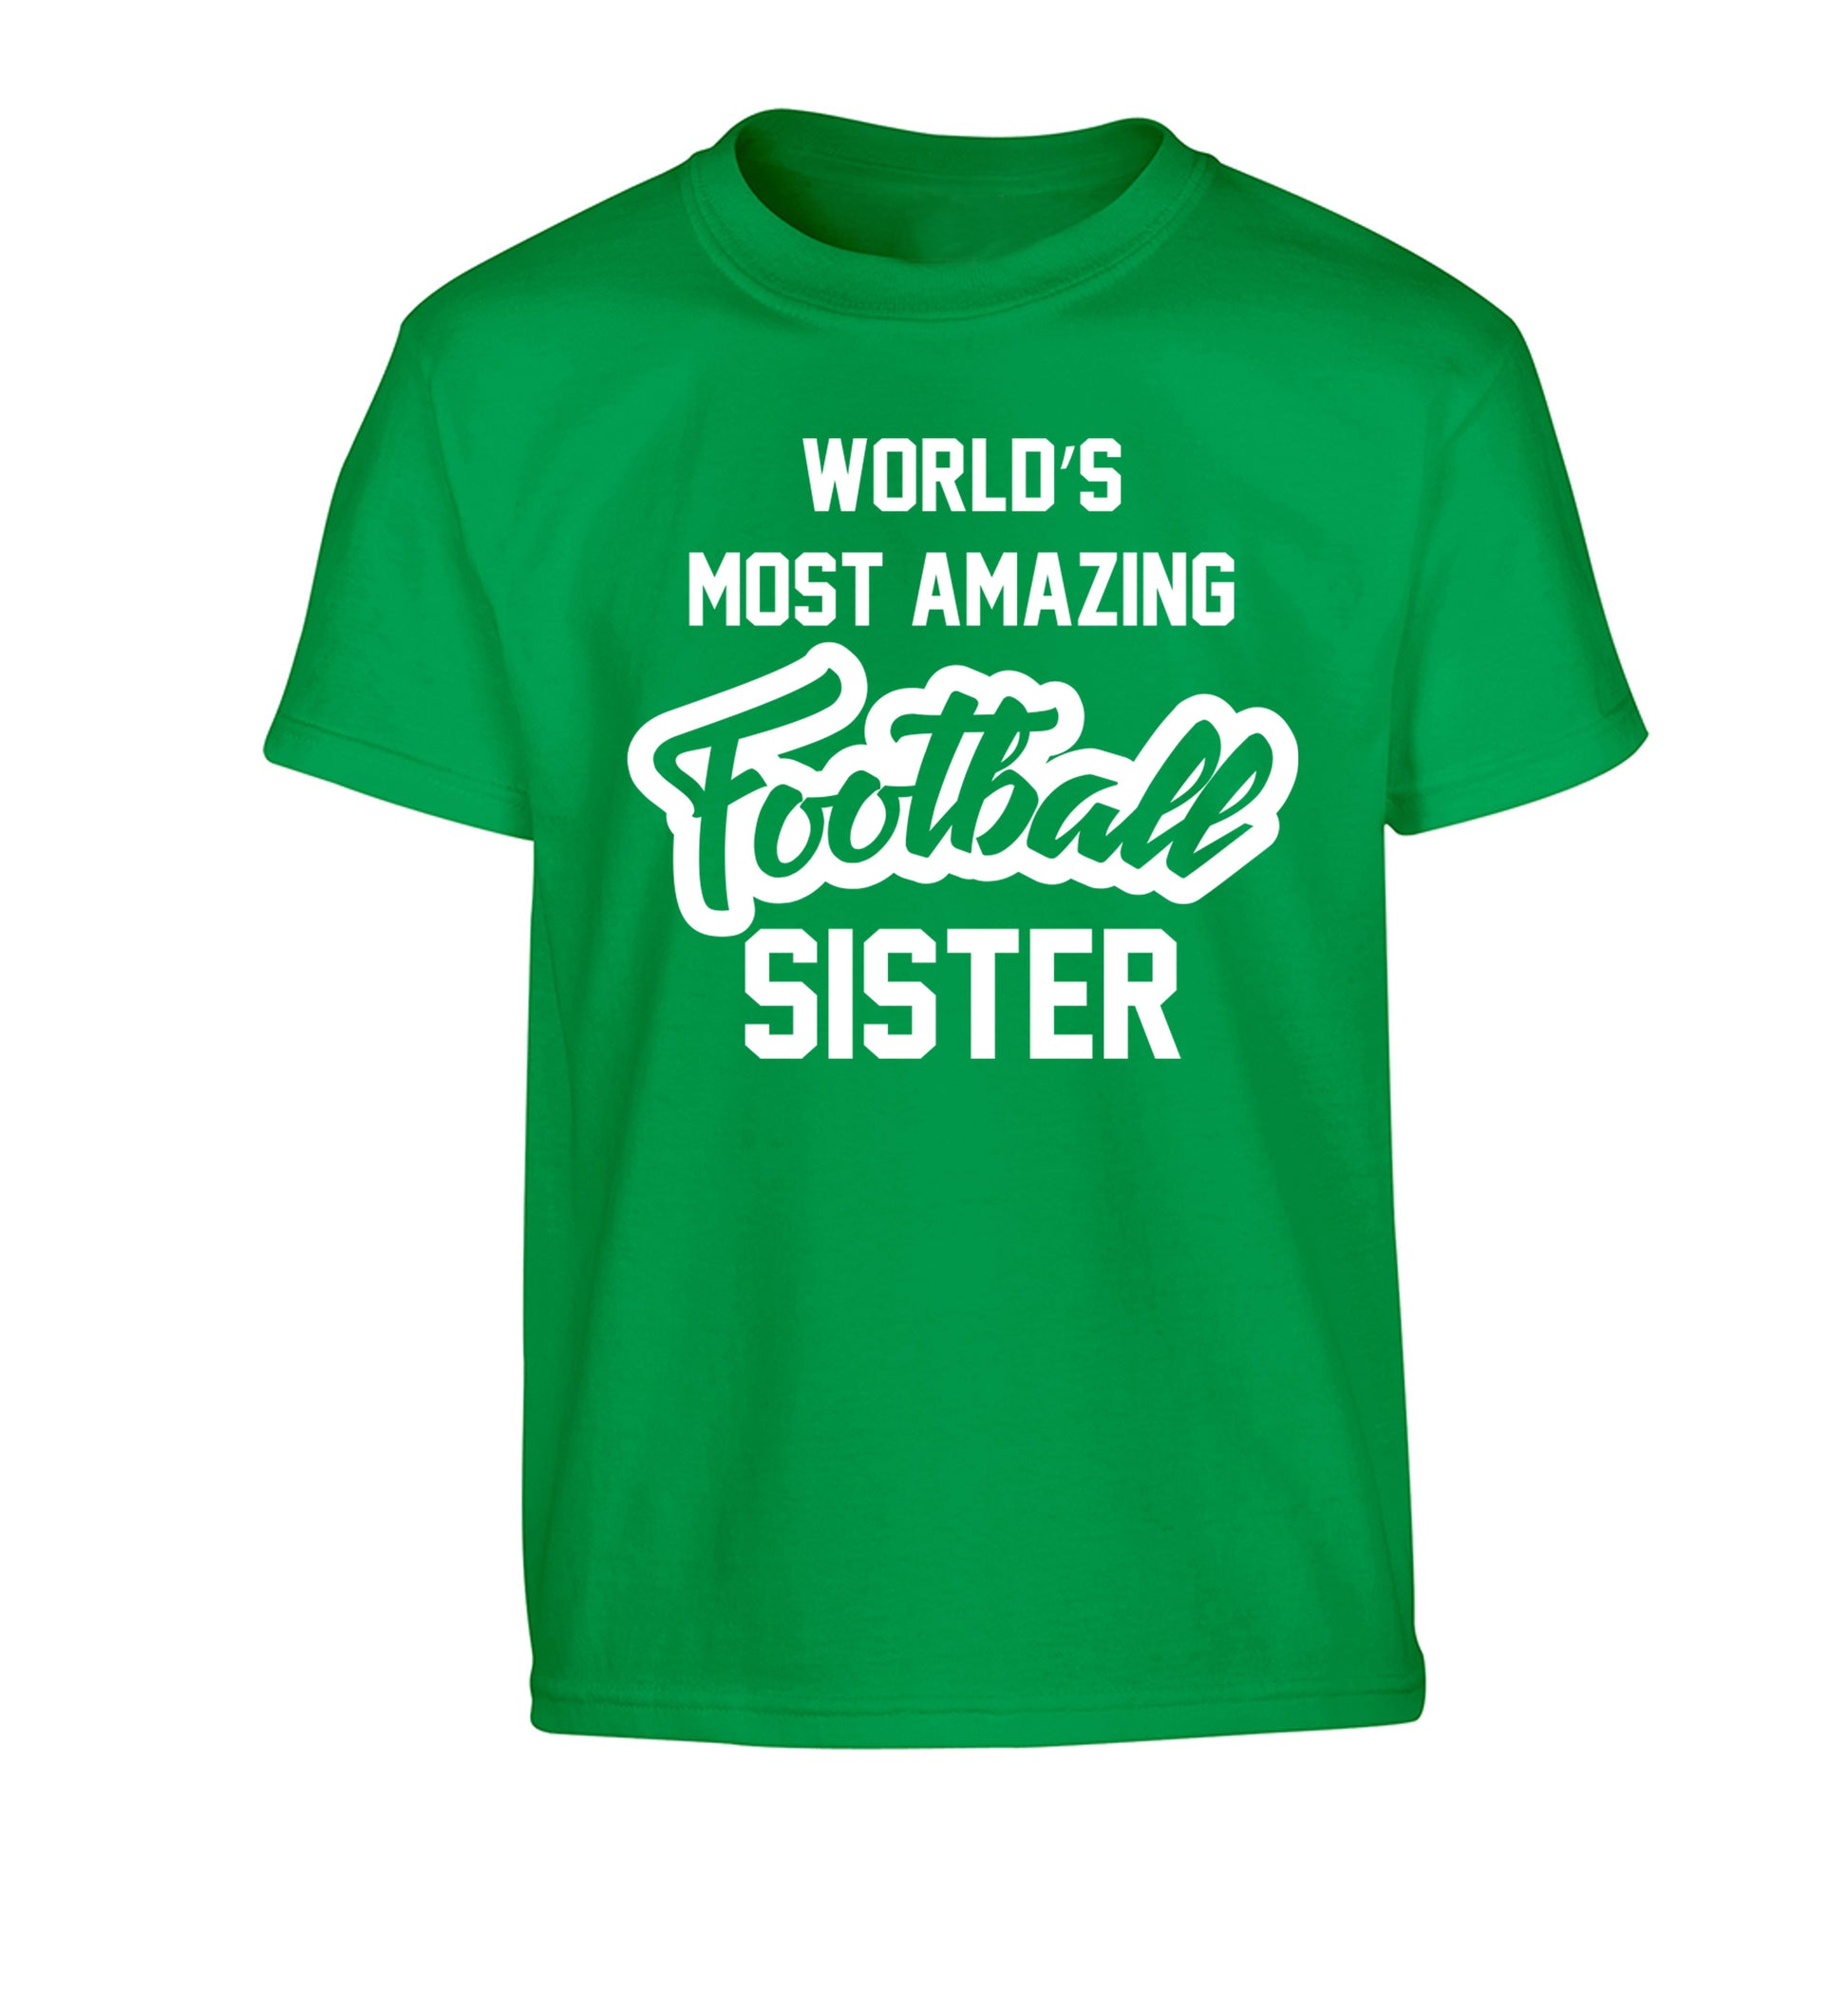 Worlds most amazing football sister Children's green Tshirt 12-14 Years